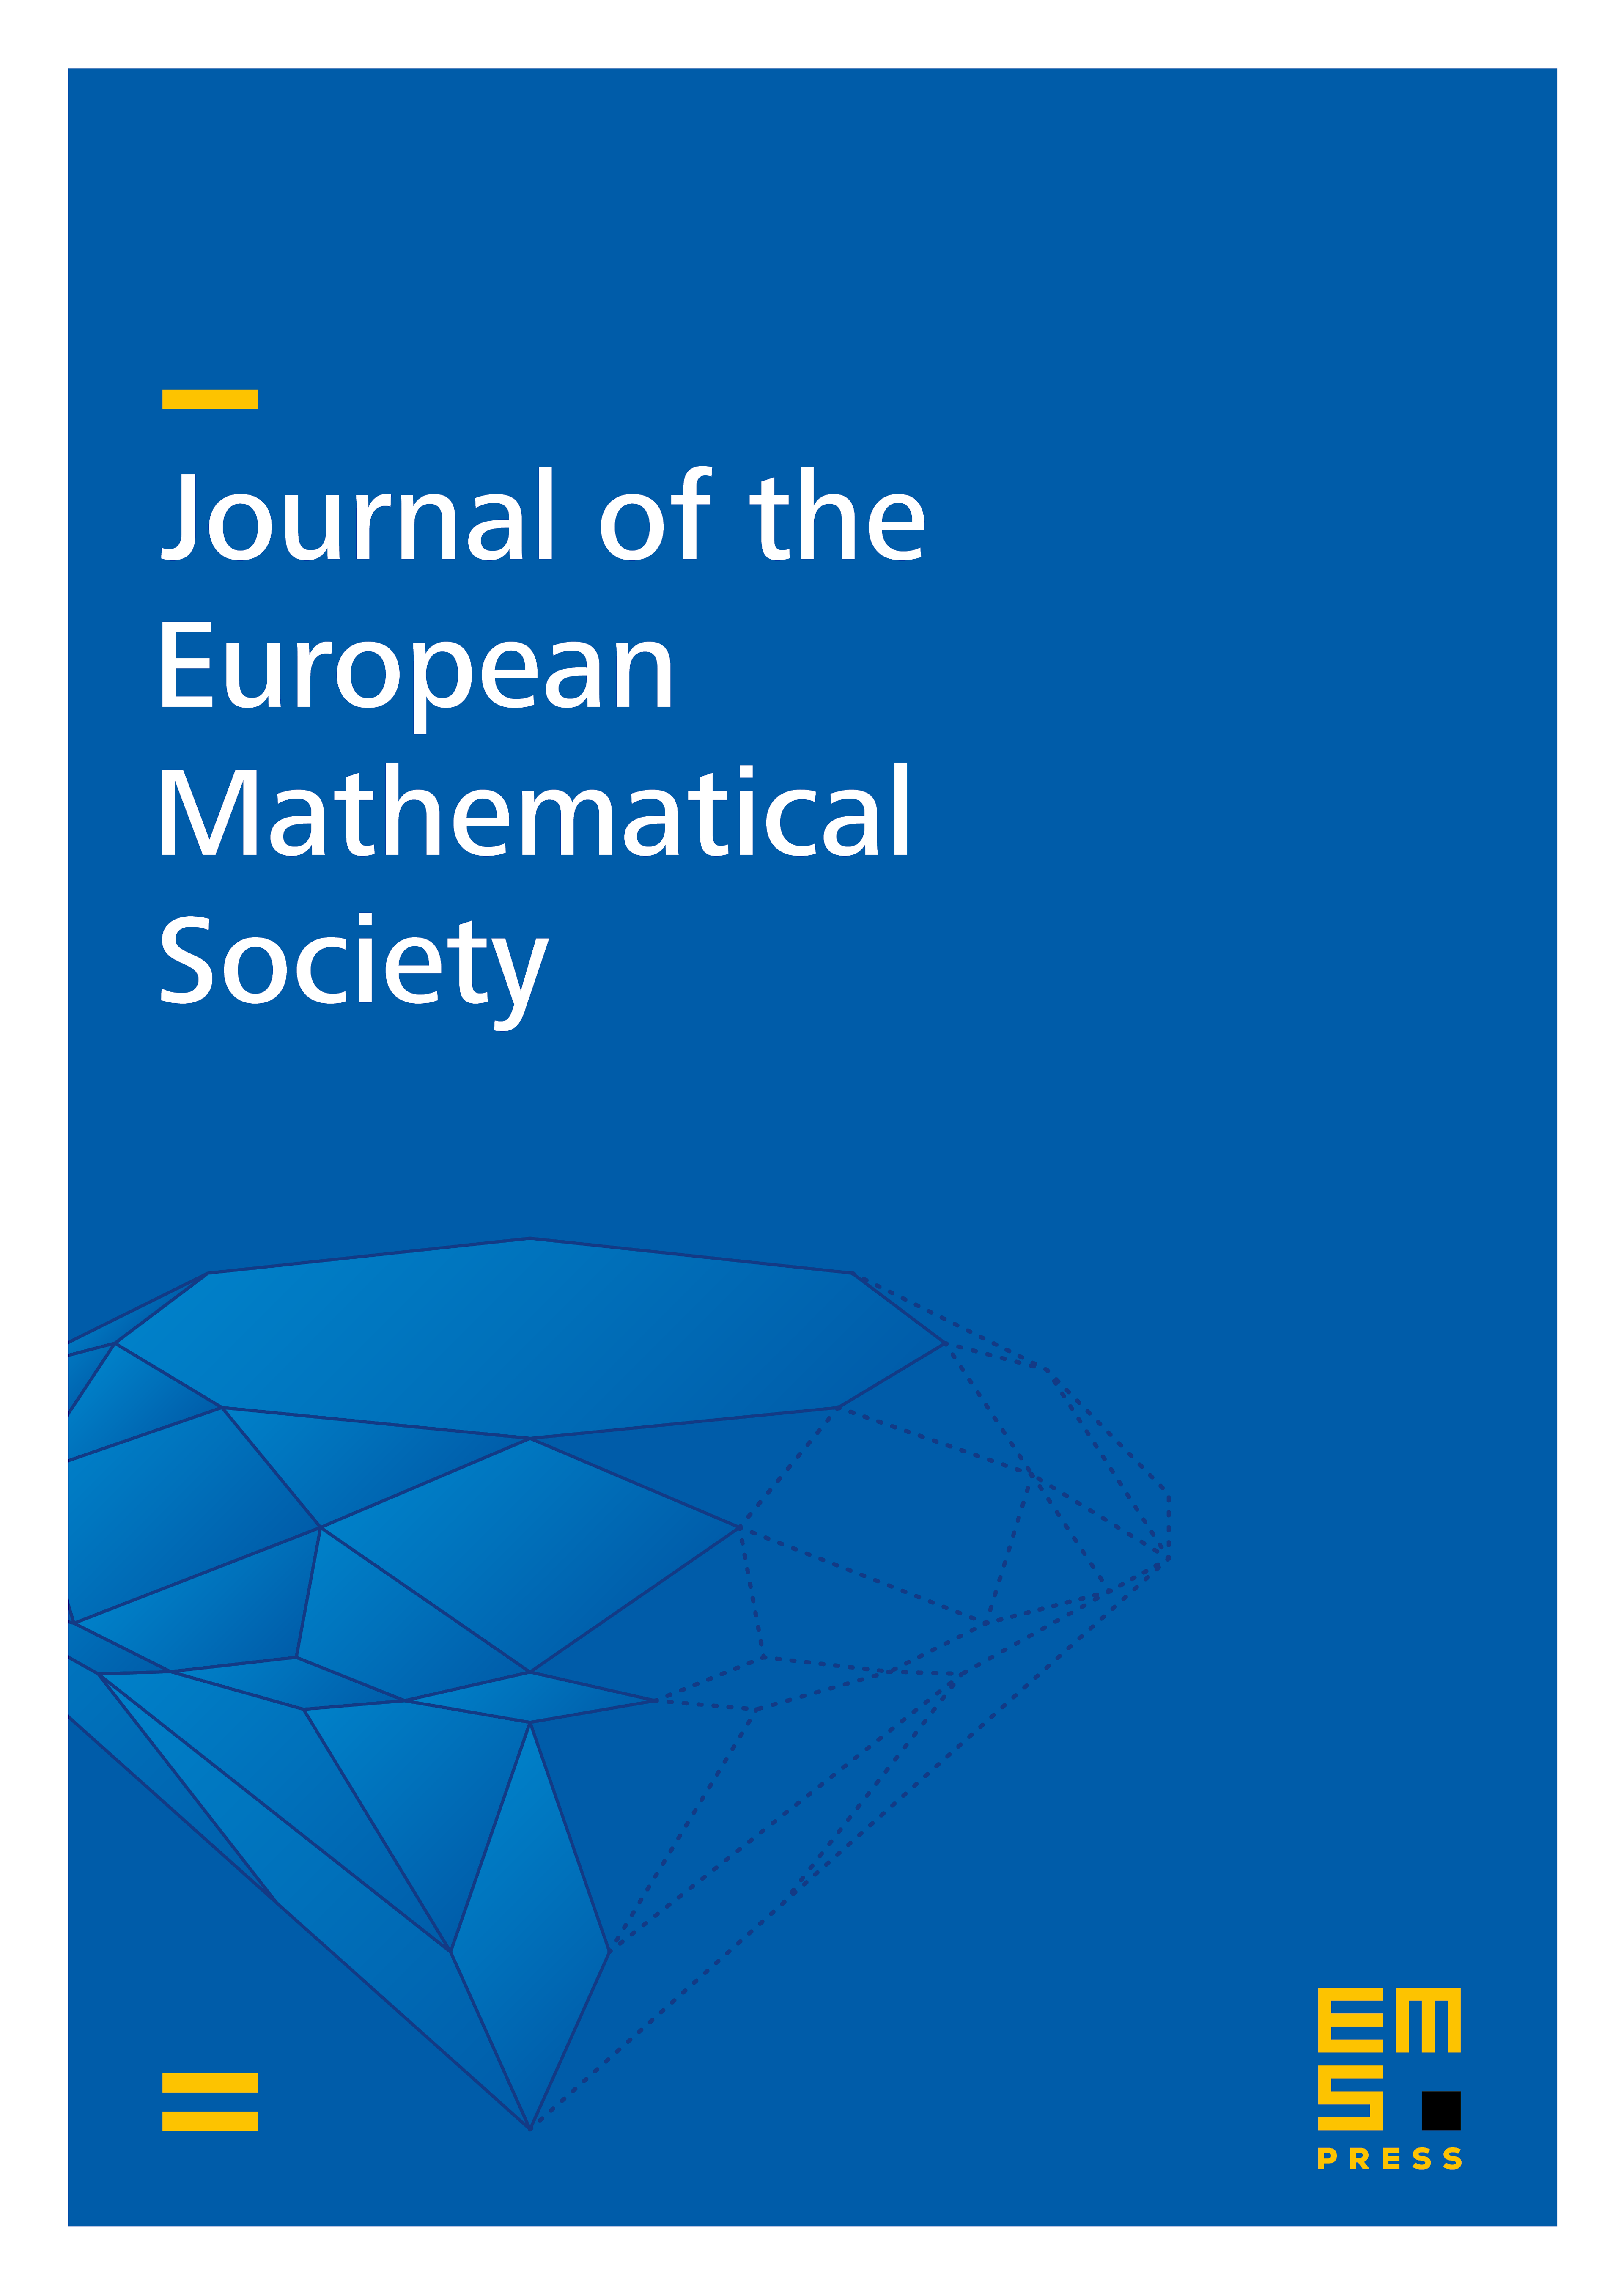 J. Eur. Math. Soc. cover